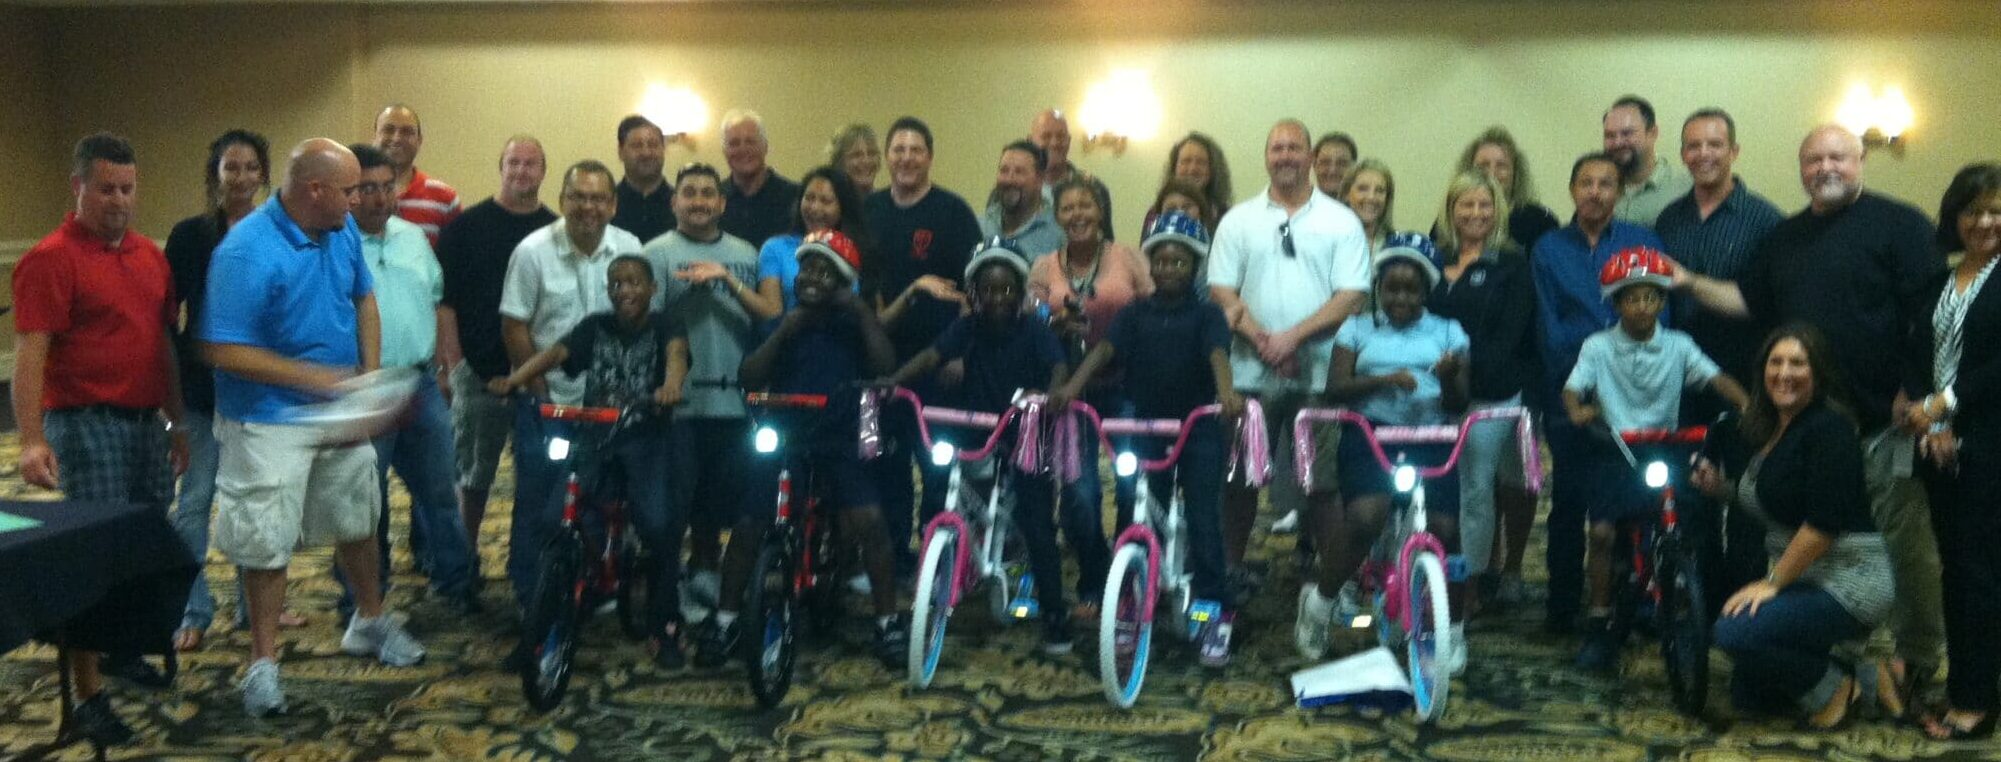 Manheim Build-A-Bike Team Building Event in Fort Worth TX